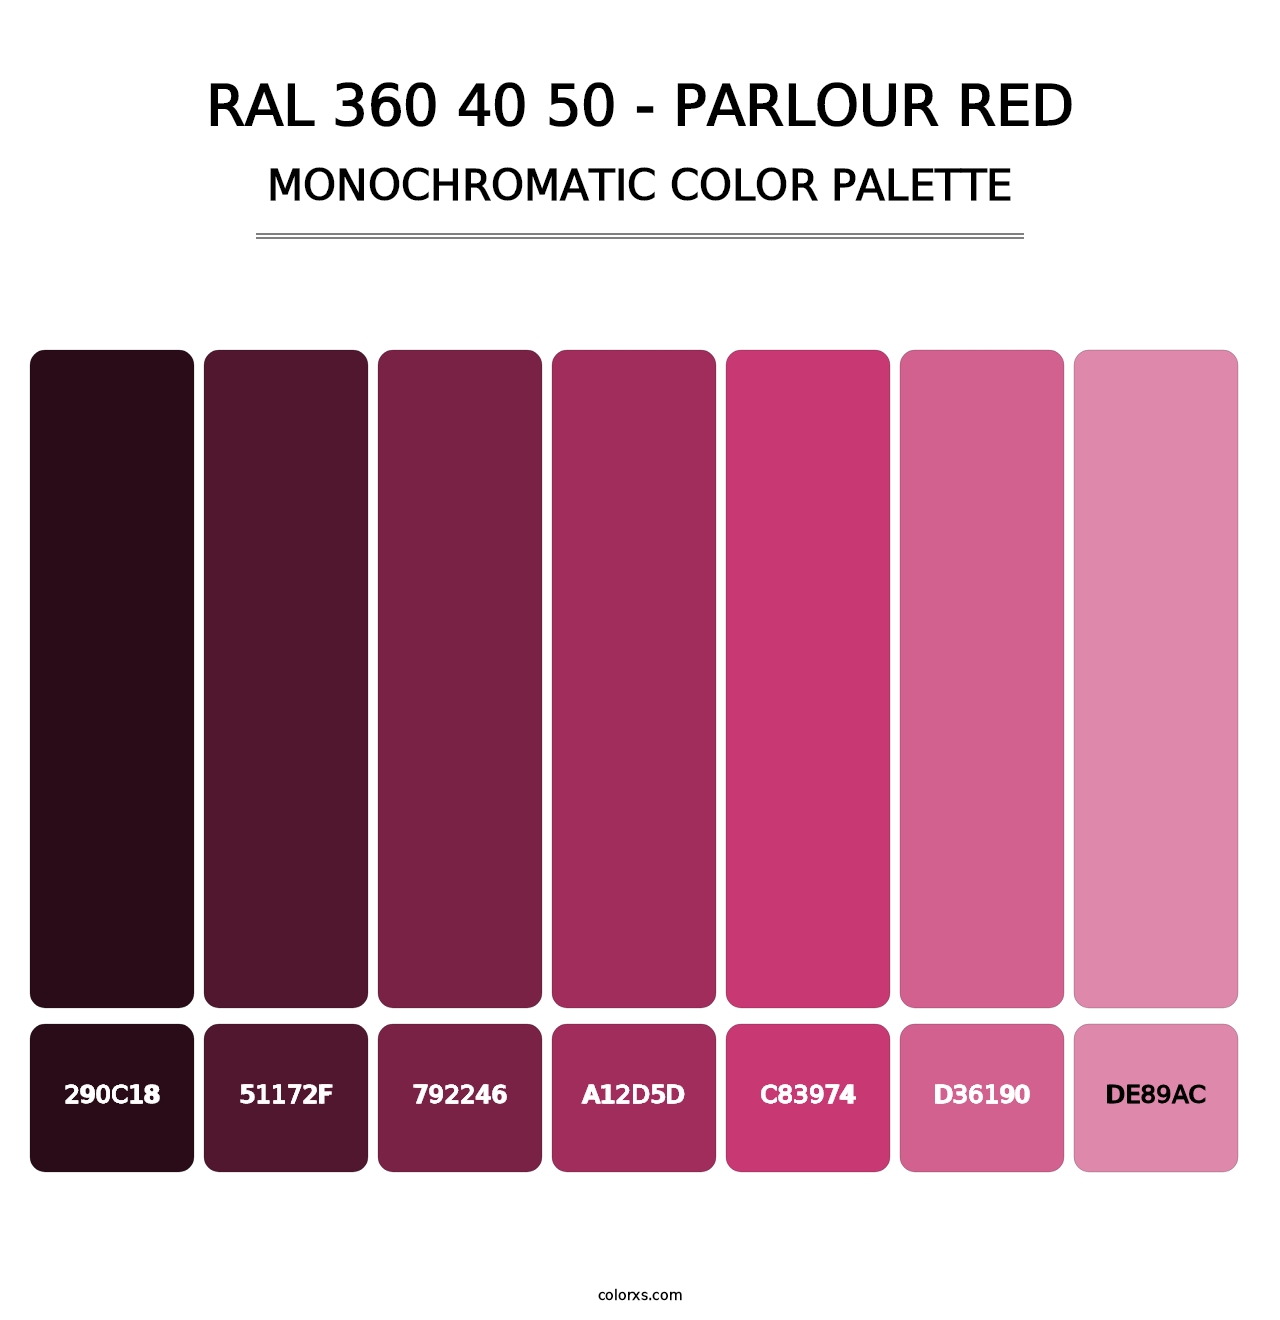 RAL 360 40 50 - Parlour Red - Monochromatic Color Palette